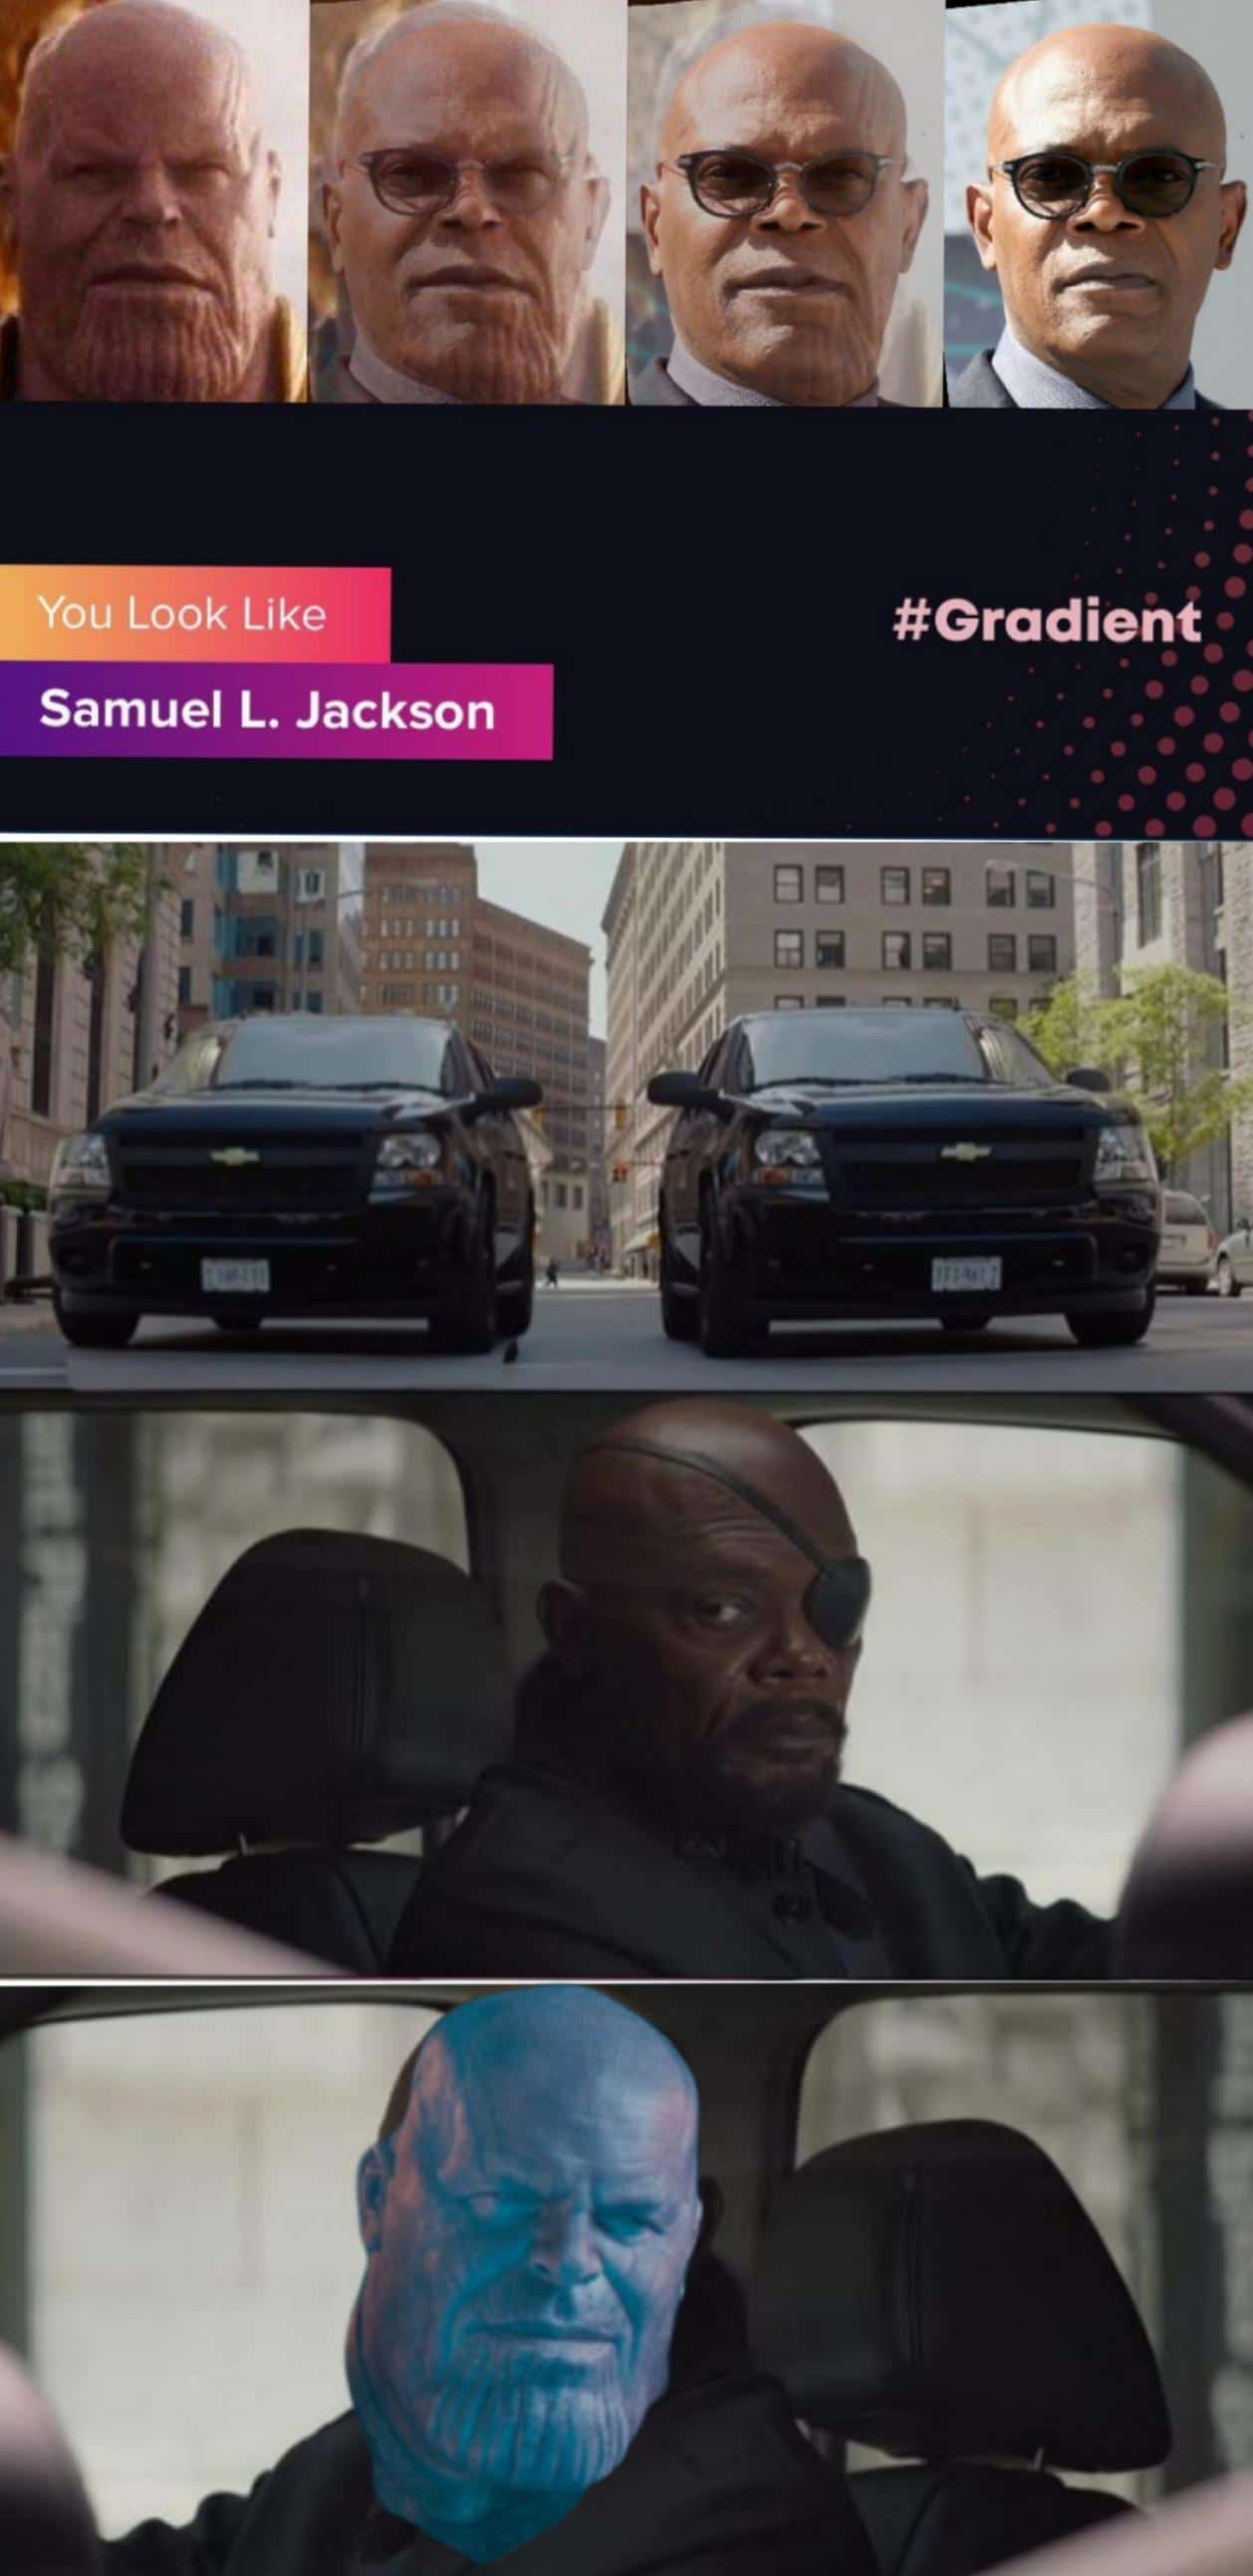 thanos avengers-memes thanos text: You Look Like Samuel L. Jackson #Gradient aa aa 